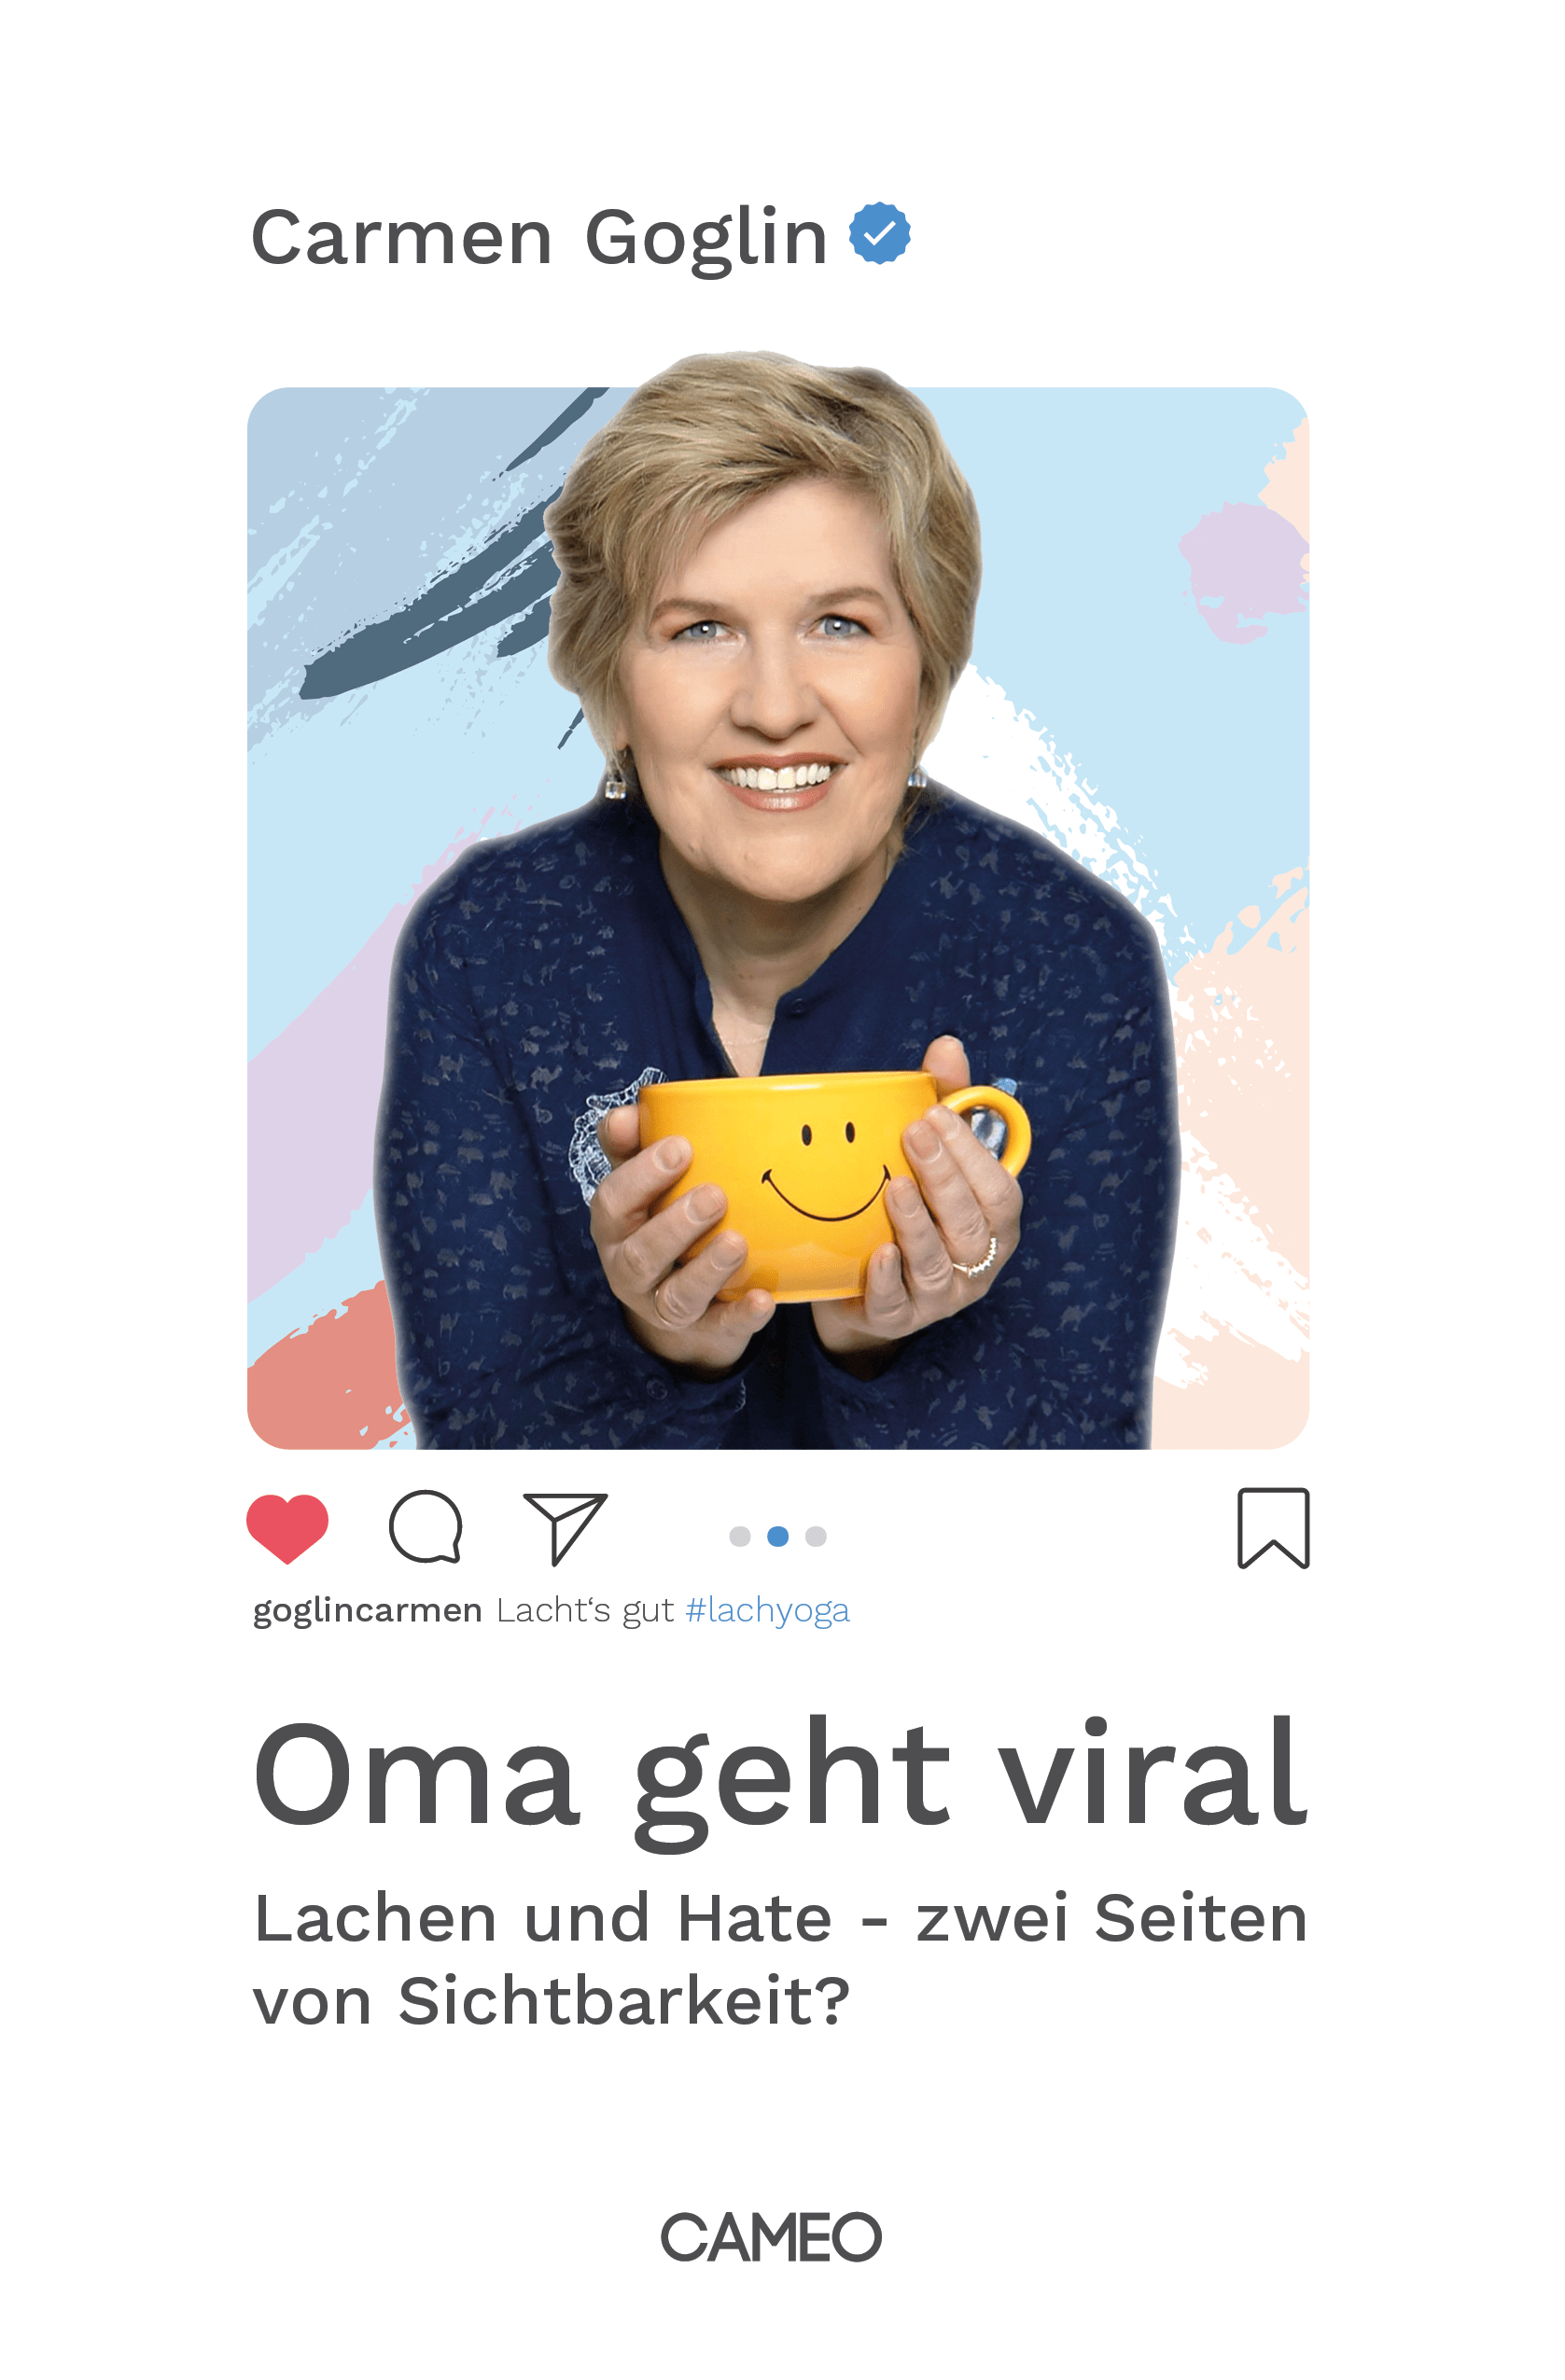 Buchvorstellung "Oma geht viral", Carmen Goglin